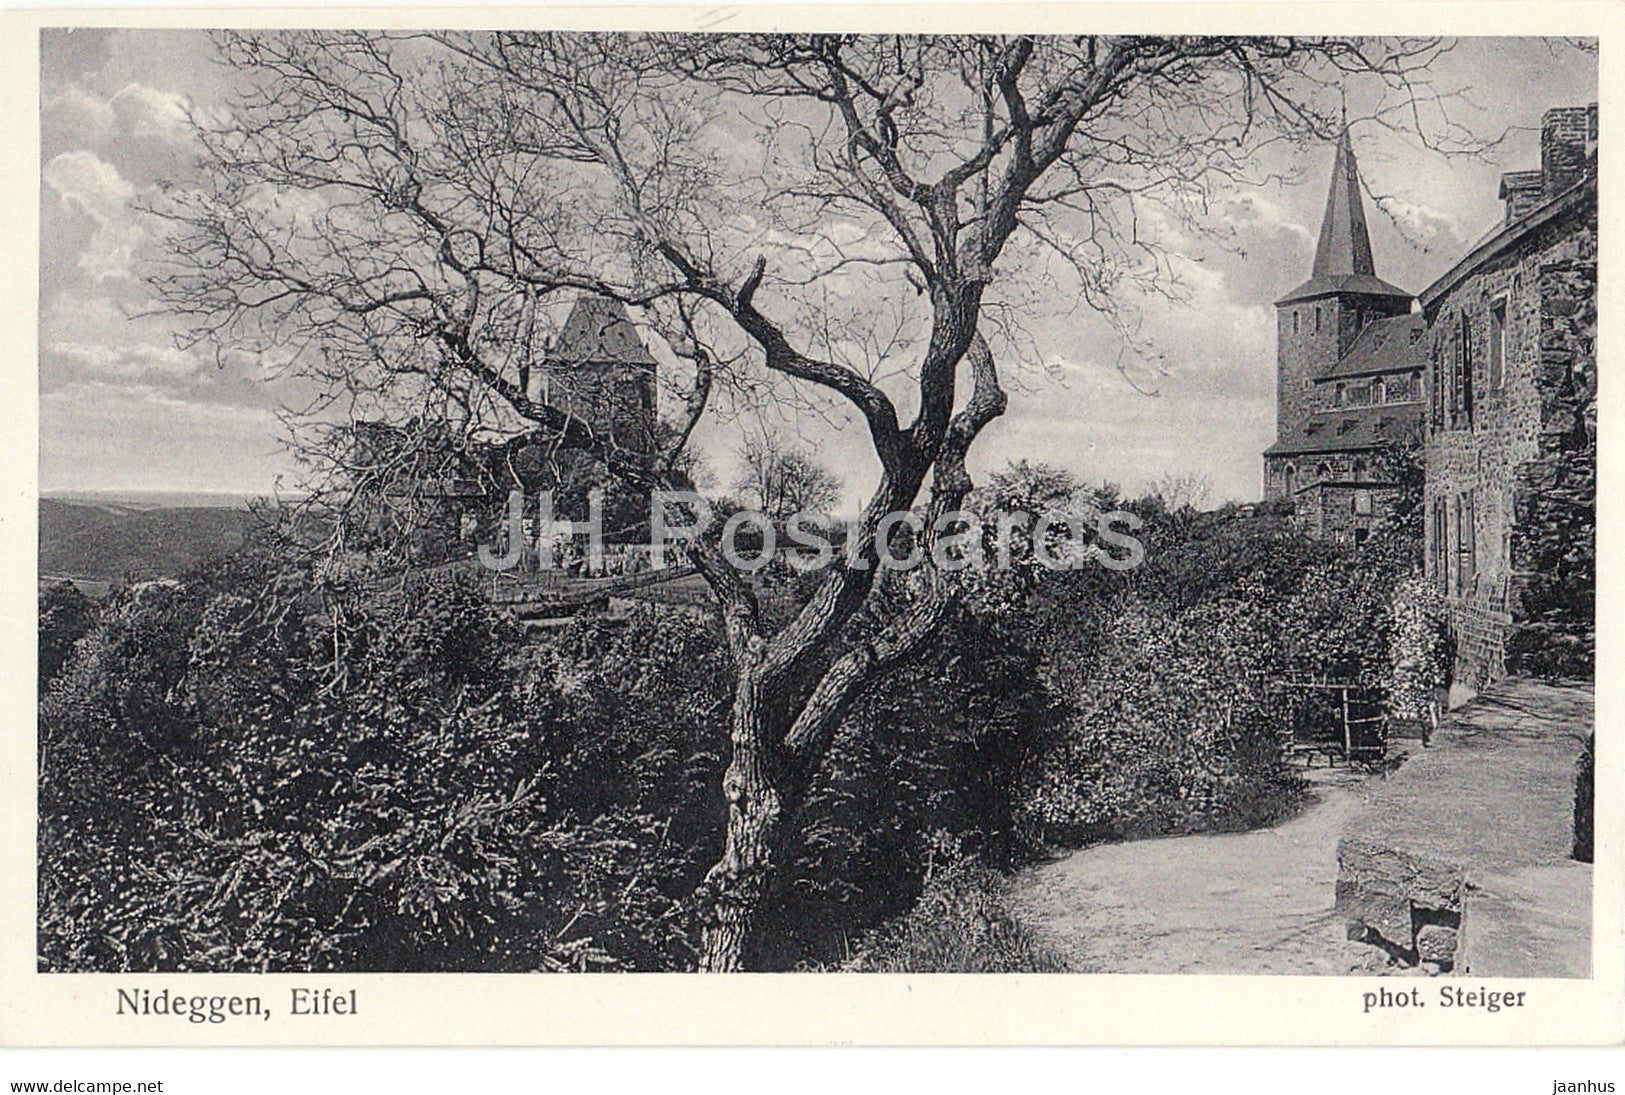 Nideggen in der Eifel - old postcard - 1931 - Germany - unused - JH Postcards